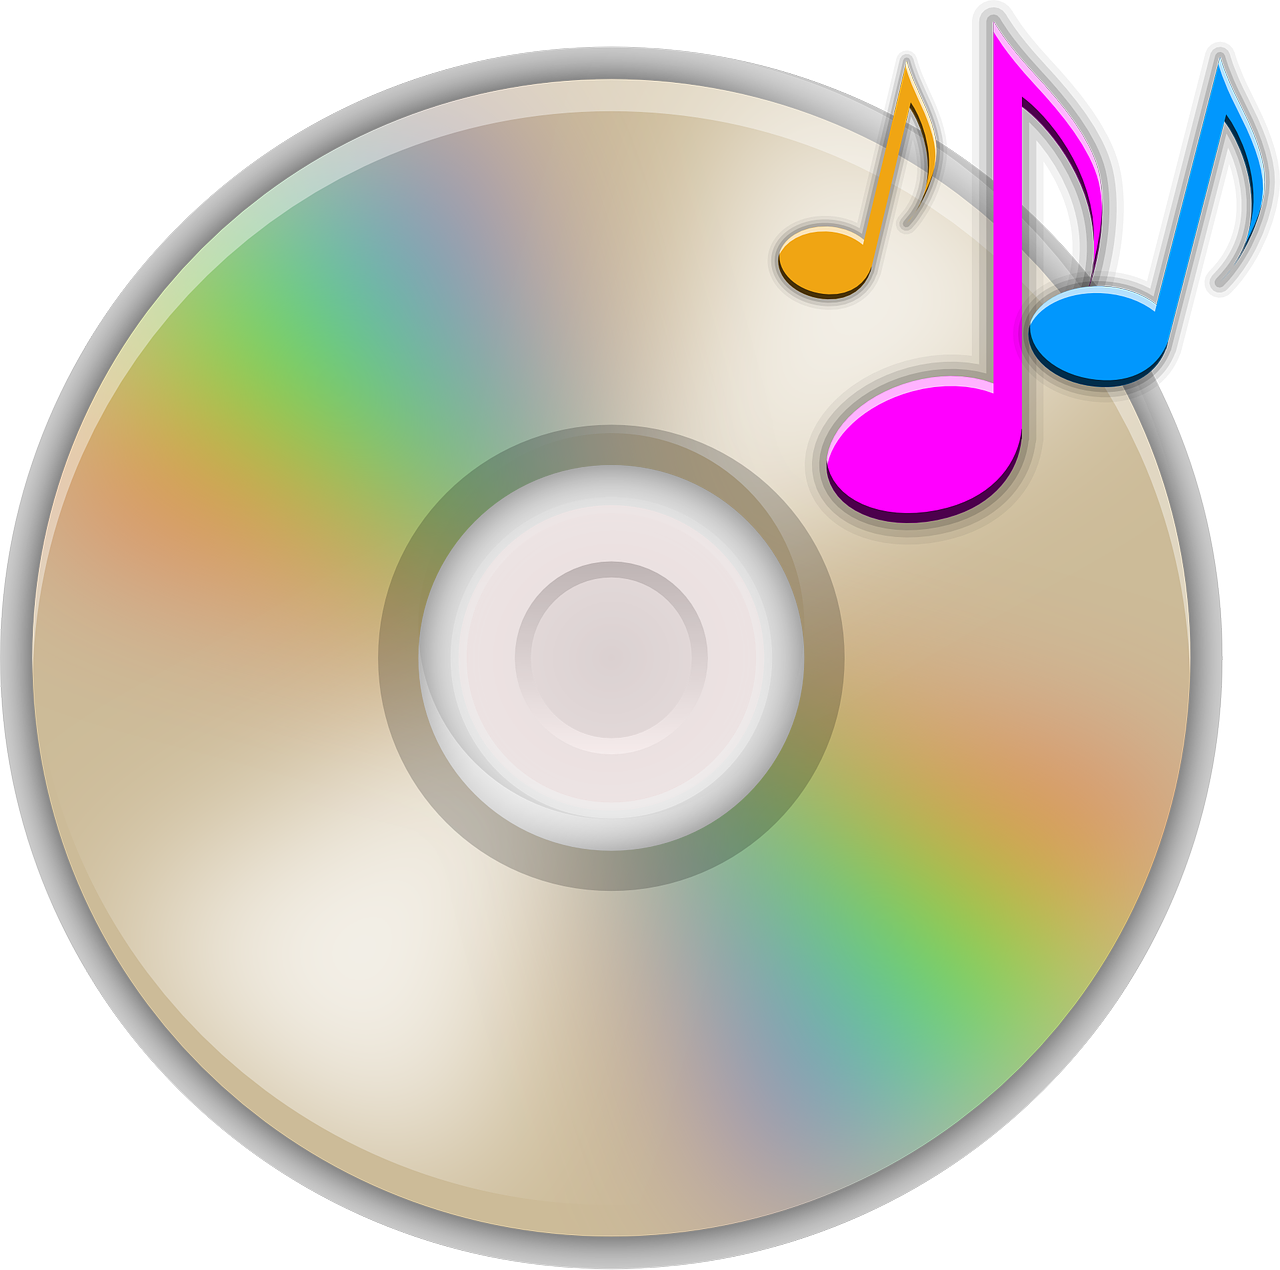 https://pixabay.com/en/cd-music-audio-notes-mp3-sound-158817/